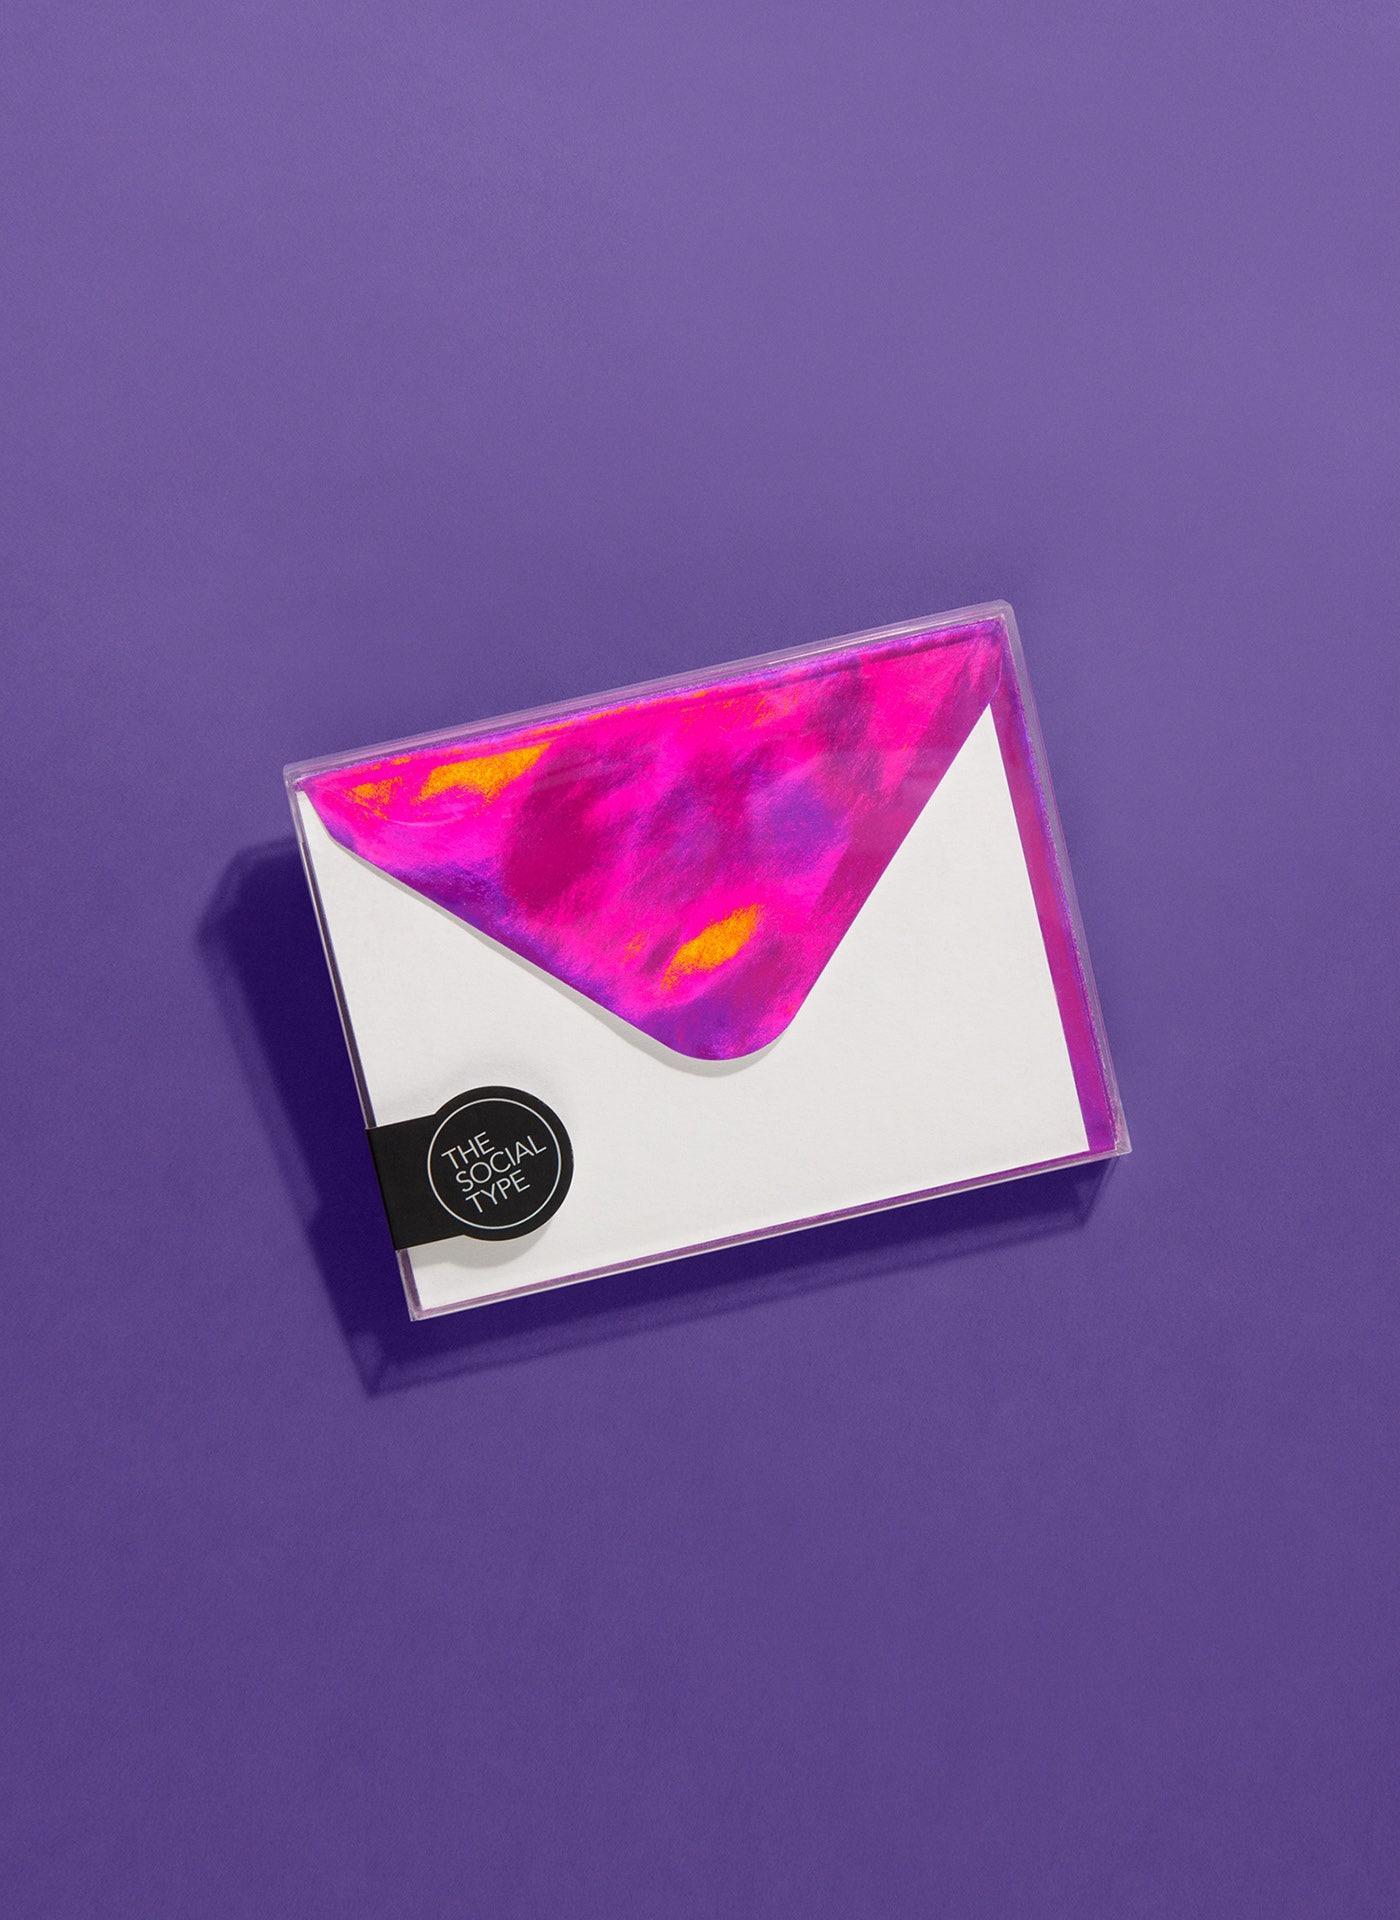 DKNY Pink Hologram Note Set Size 5